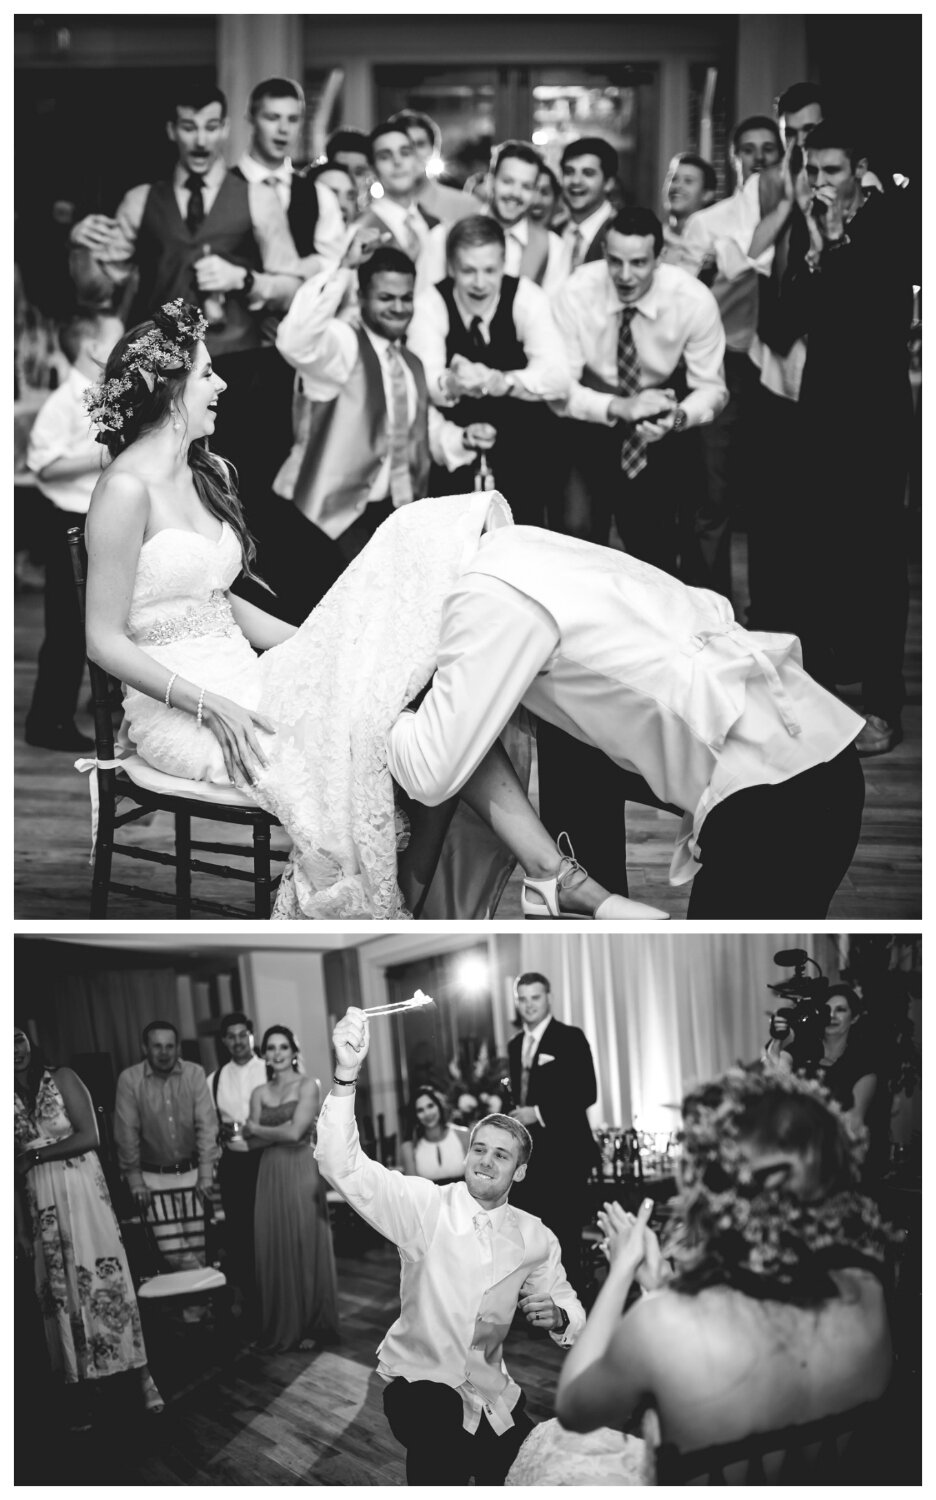  Garter toss at Highlands Ranch Mansion.&nbsp;  hotographed by JMGant Photography, Denver Colorado wedding photographer.&nbsp; 